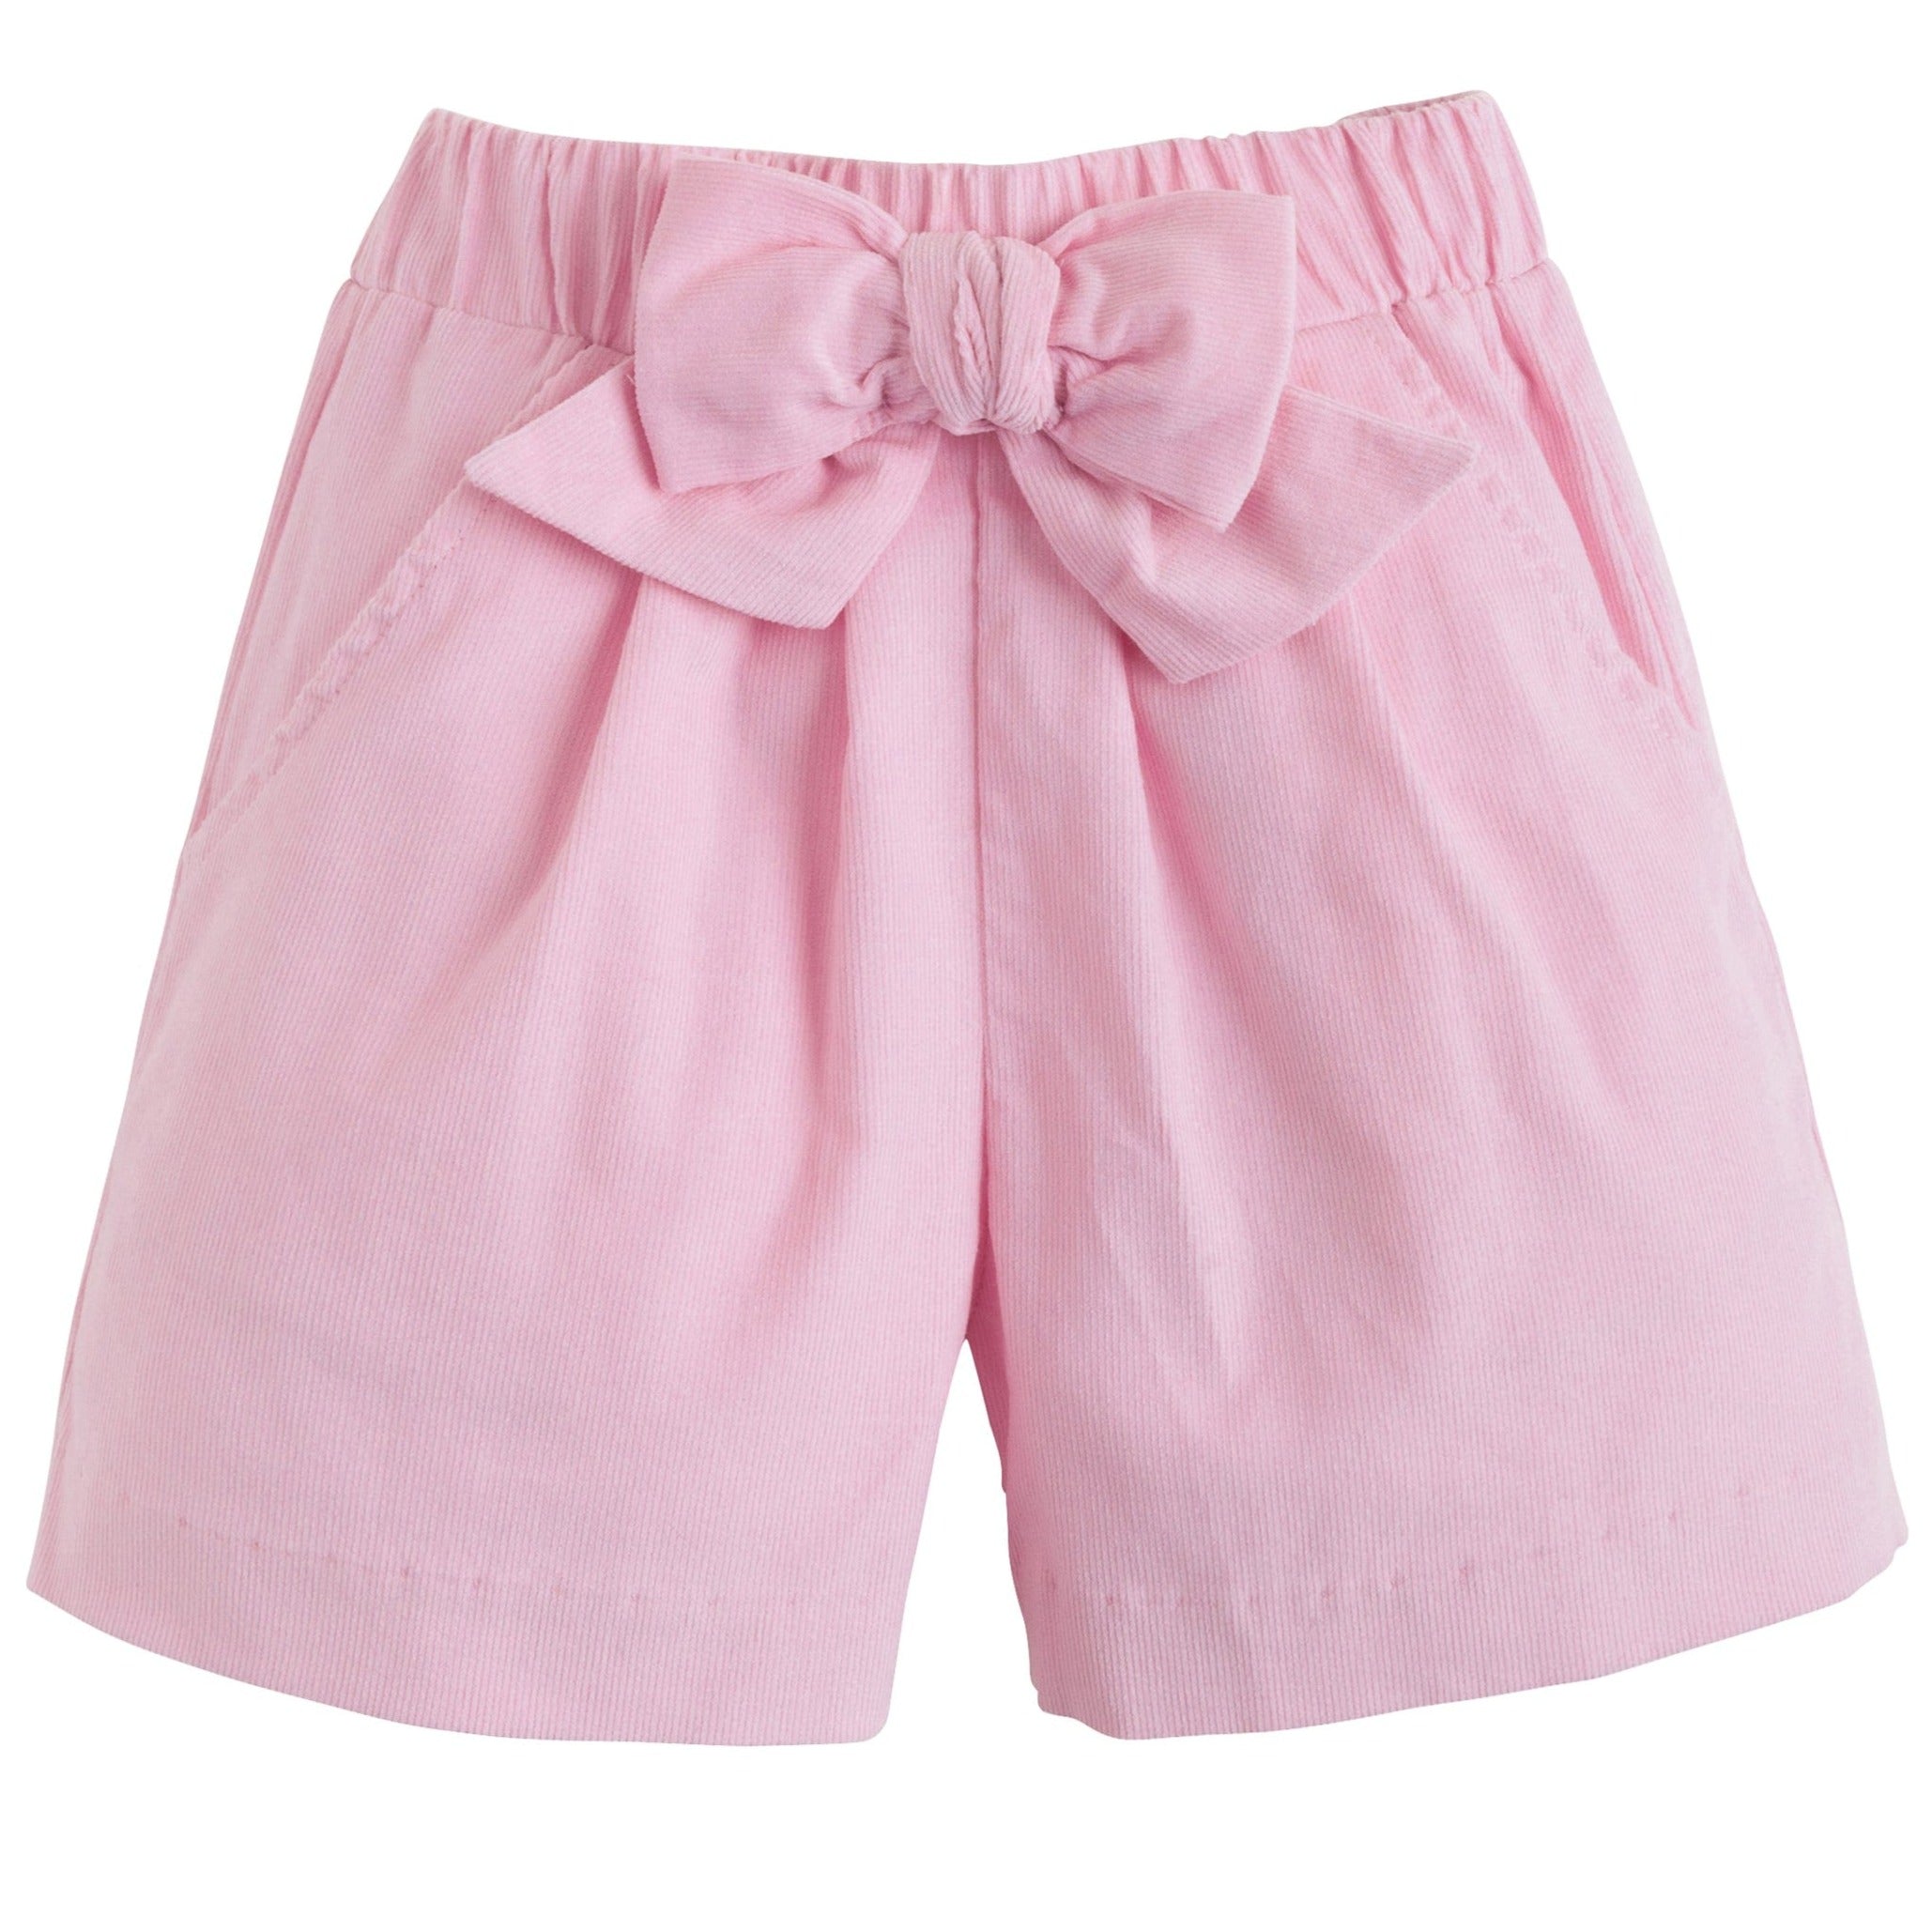 Kids Girls Shorts 100% Cotton Dance Gym Sports Pink Summer Hot Short Pant  5-13Yr | eBay